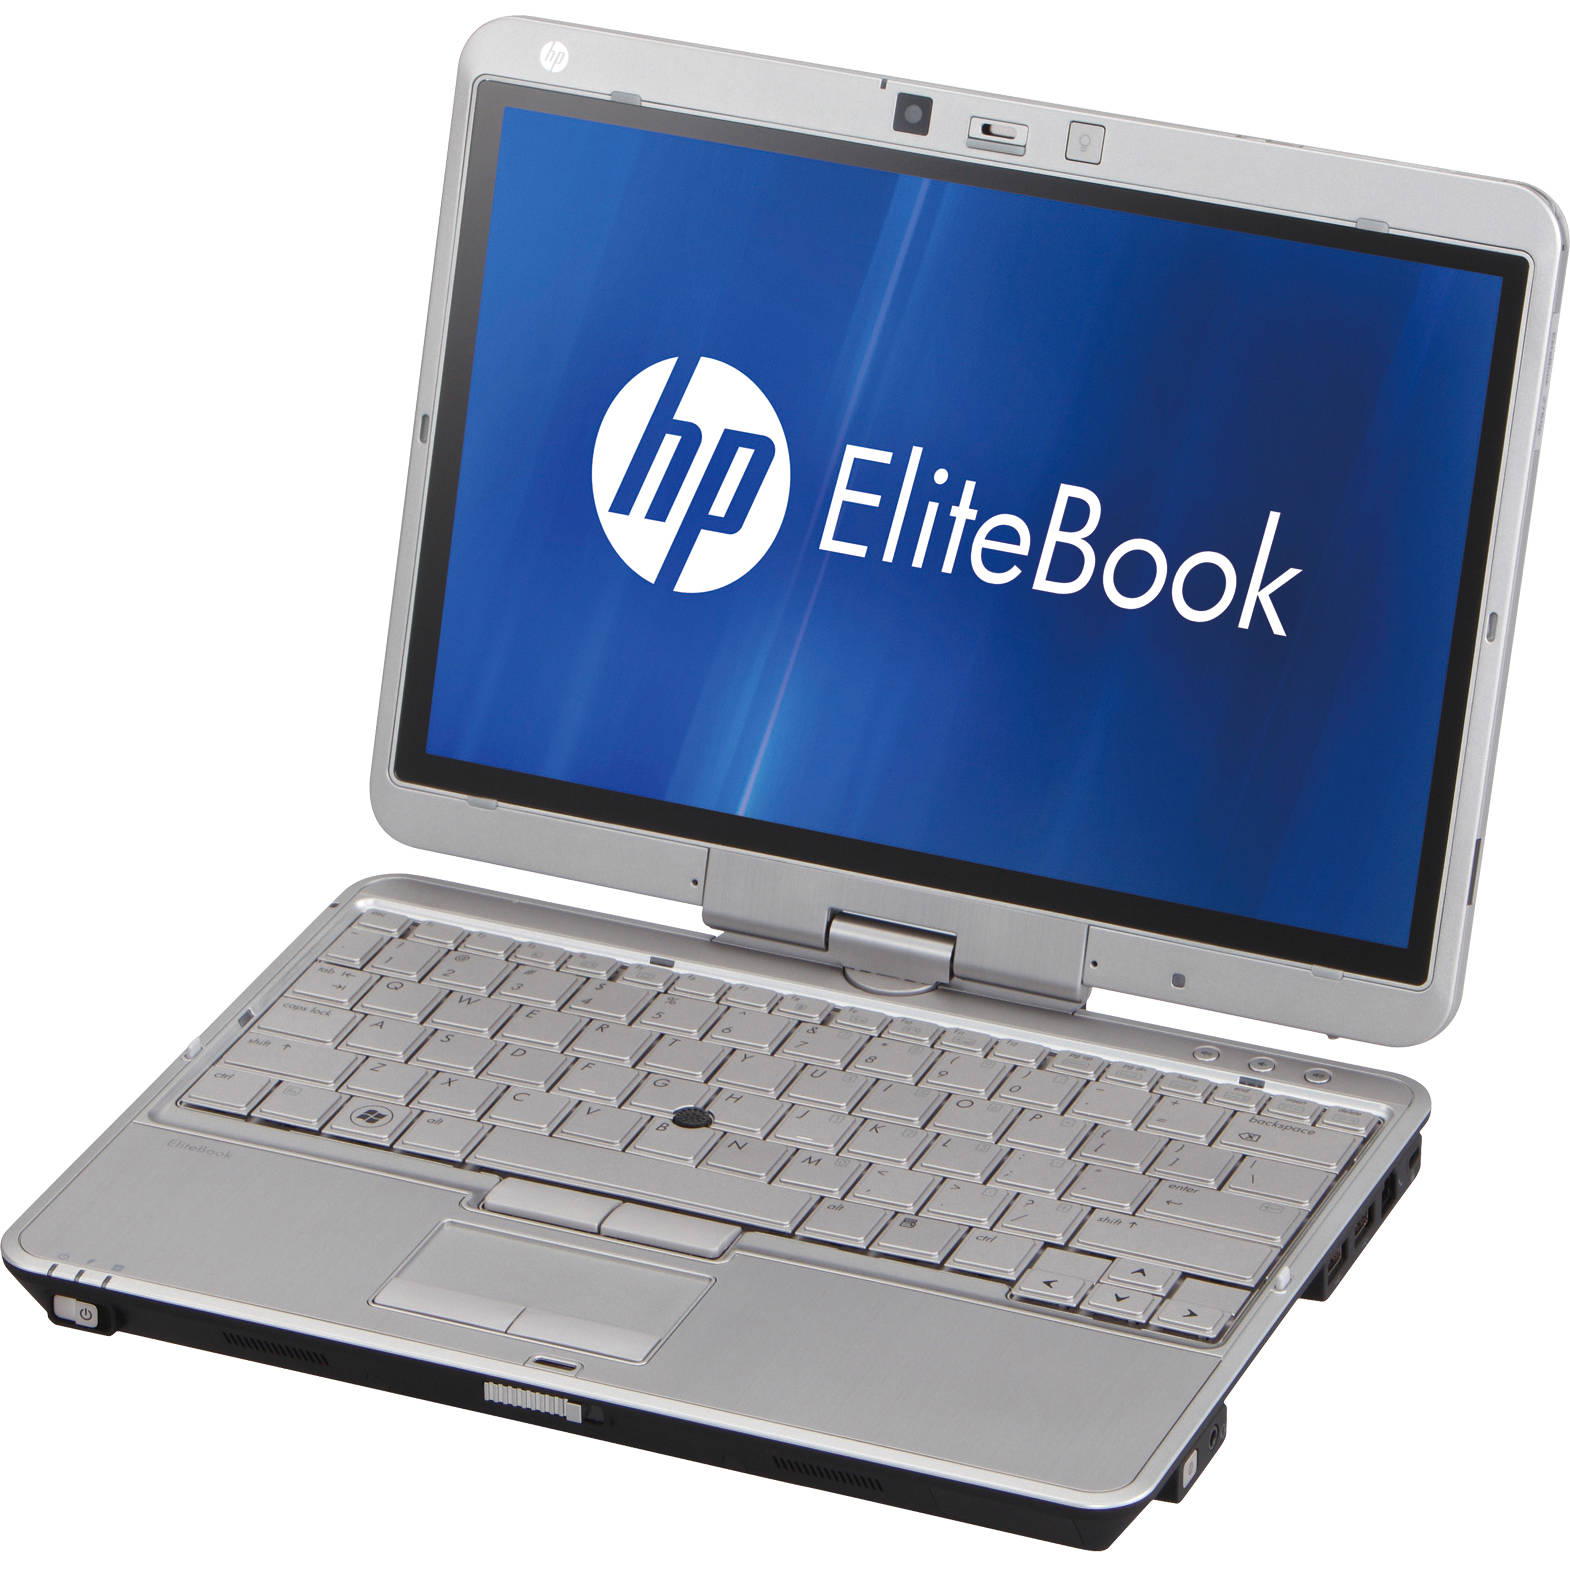 NOTEBOOK HP ELITEBOOK 2760P I5 2520M 2.5GHz 3M 2G 250 VGA INTEL HD 3000 LED 12.1 / 360  ALUMINIUM SILVER مستعمل بطاريه ساعتين بدون سواقه  مع قلم, Used Laptops